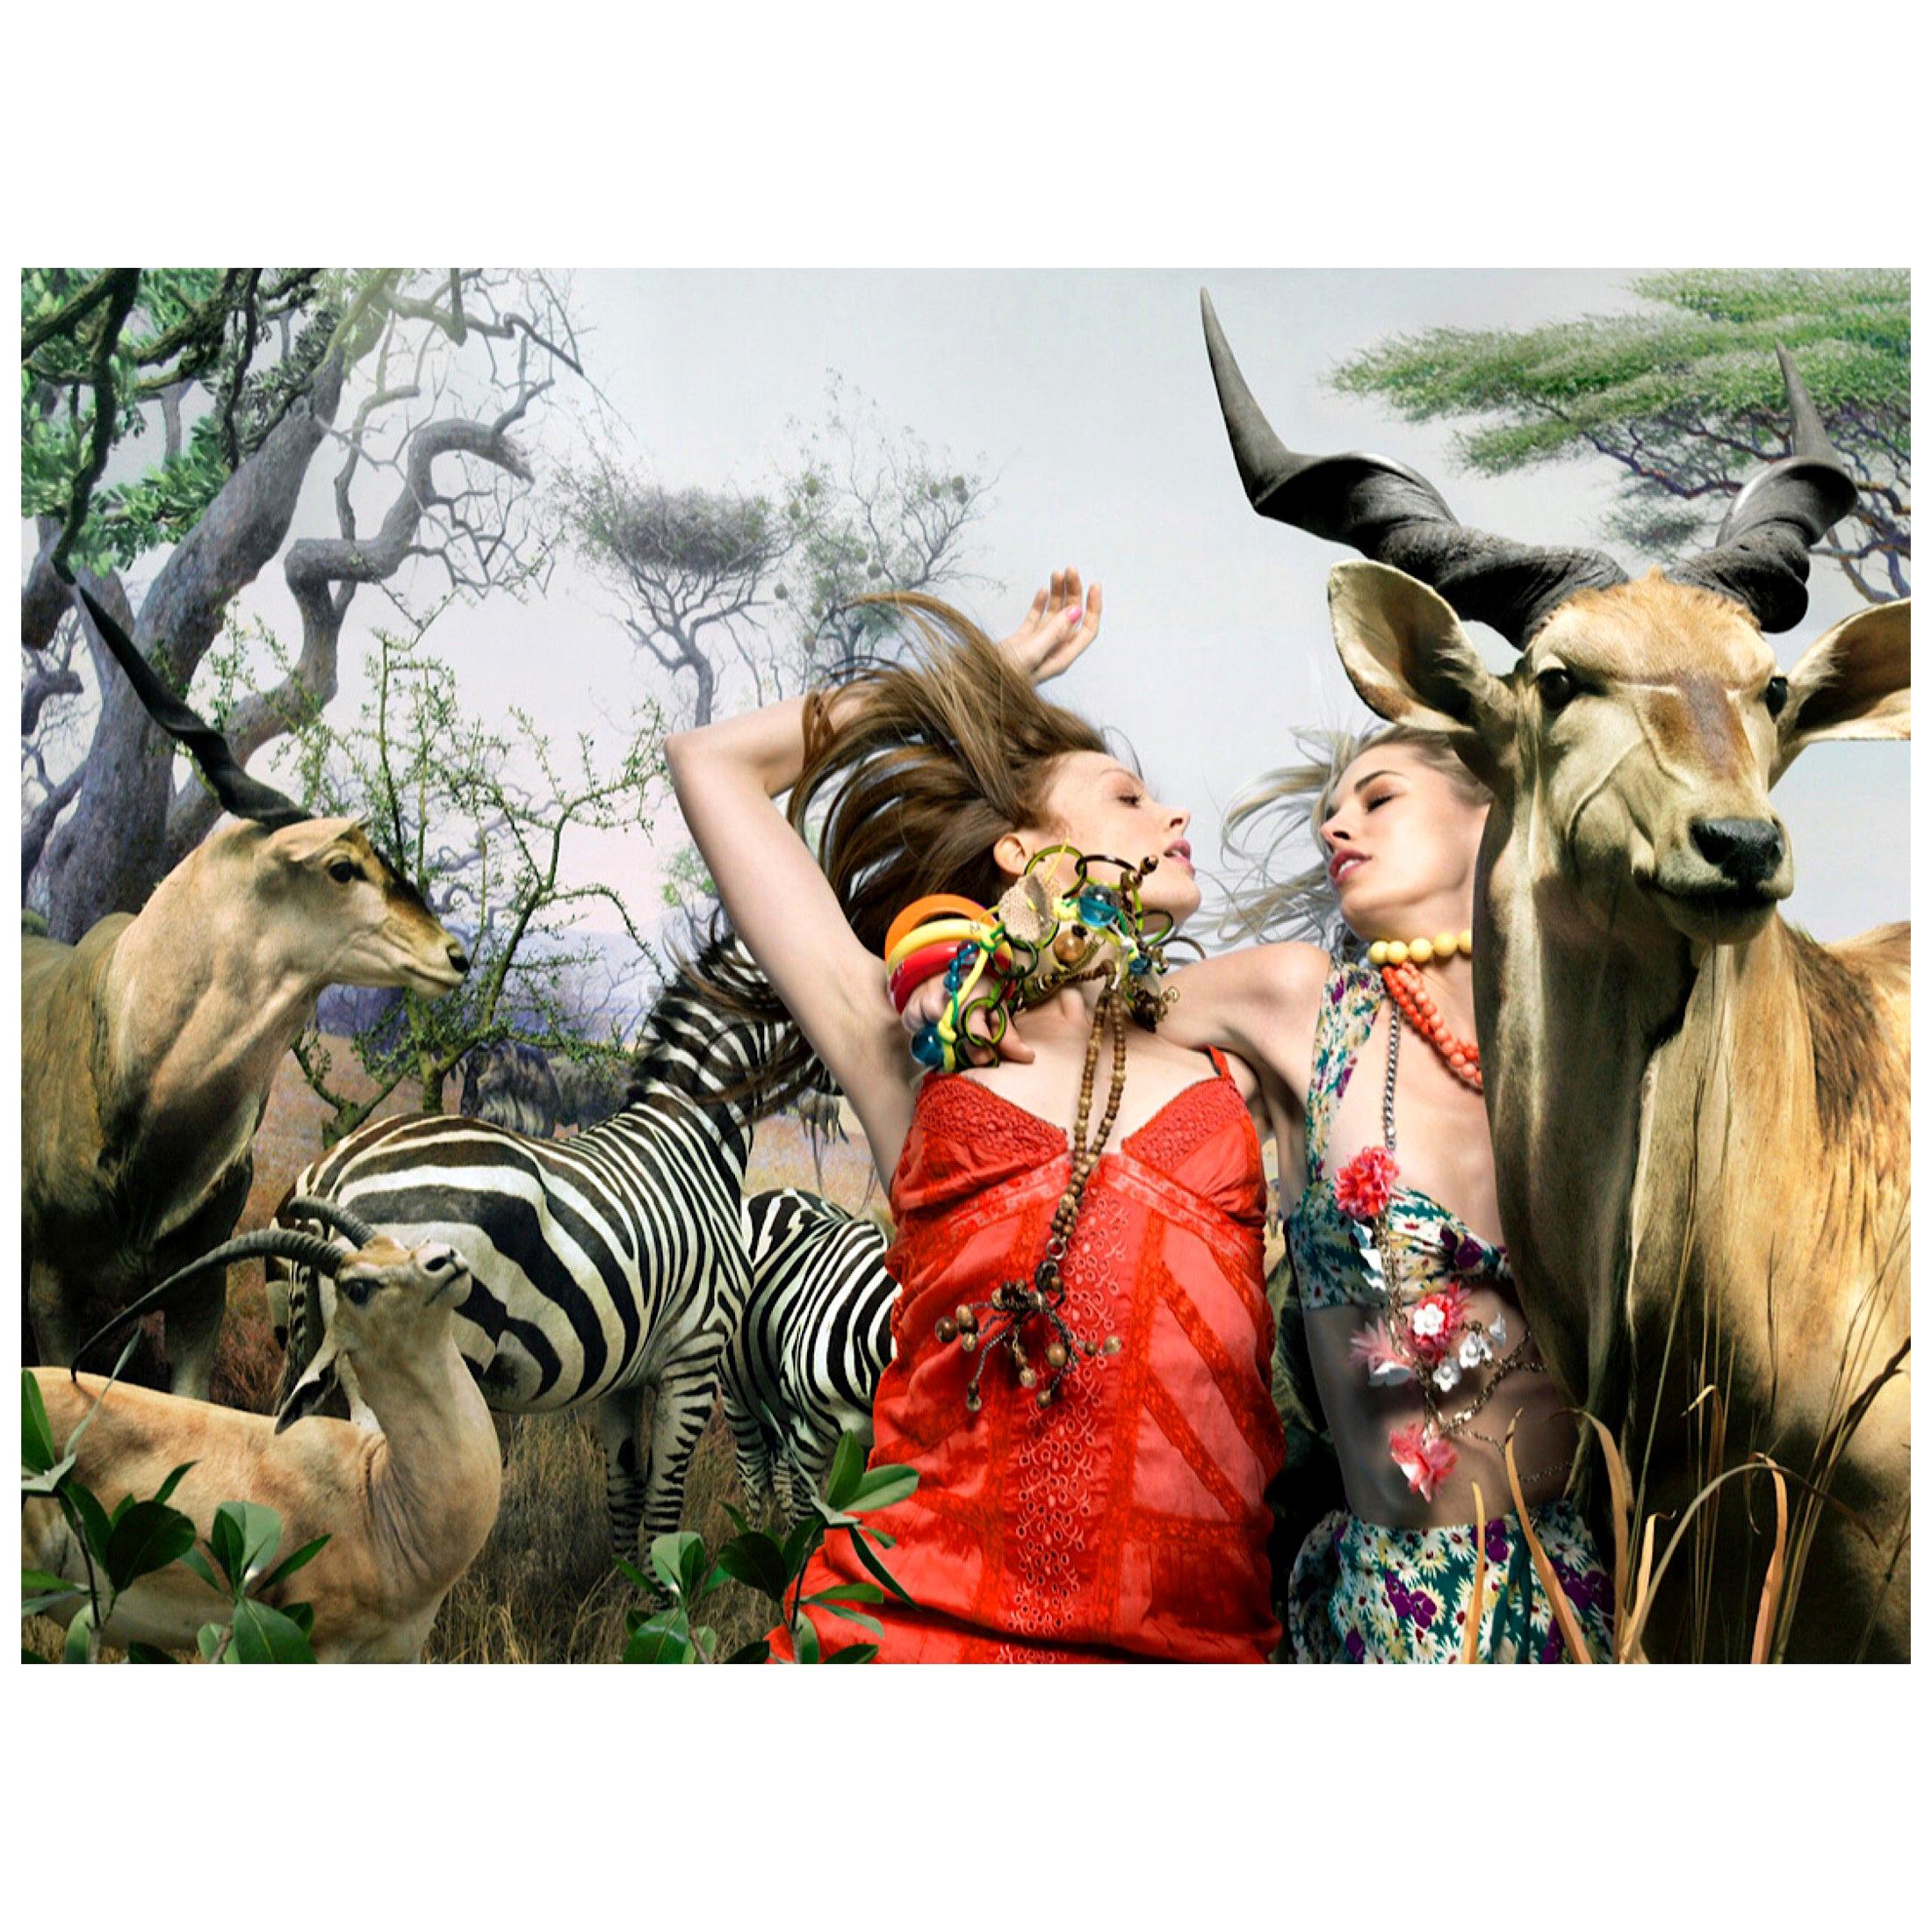 Nicola Majocchi Photograph Safari Fashion, 2001 For Sale